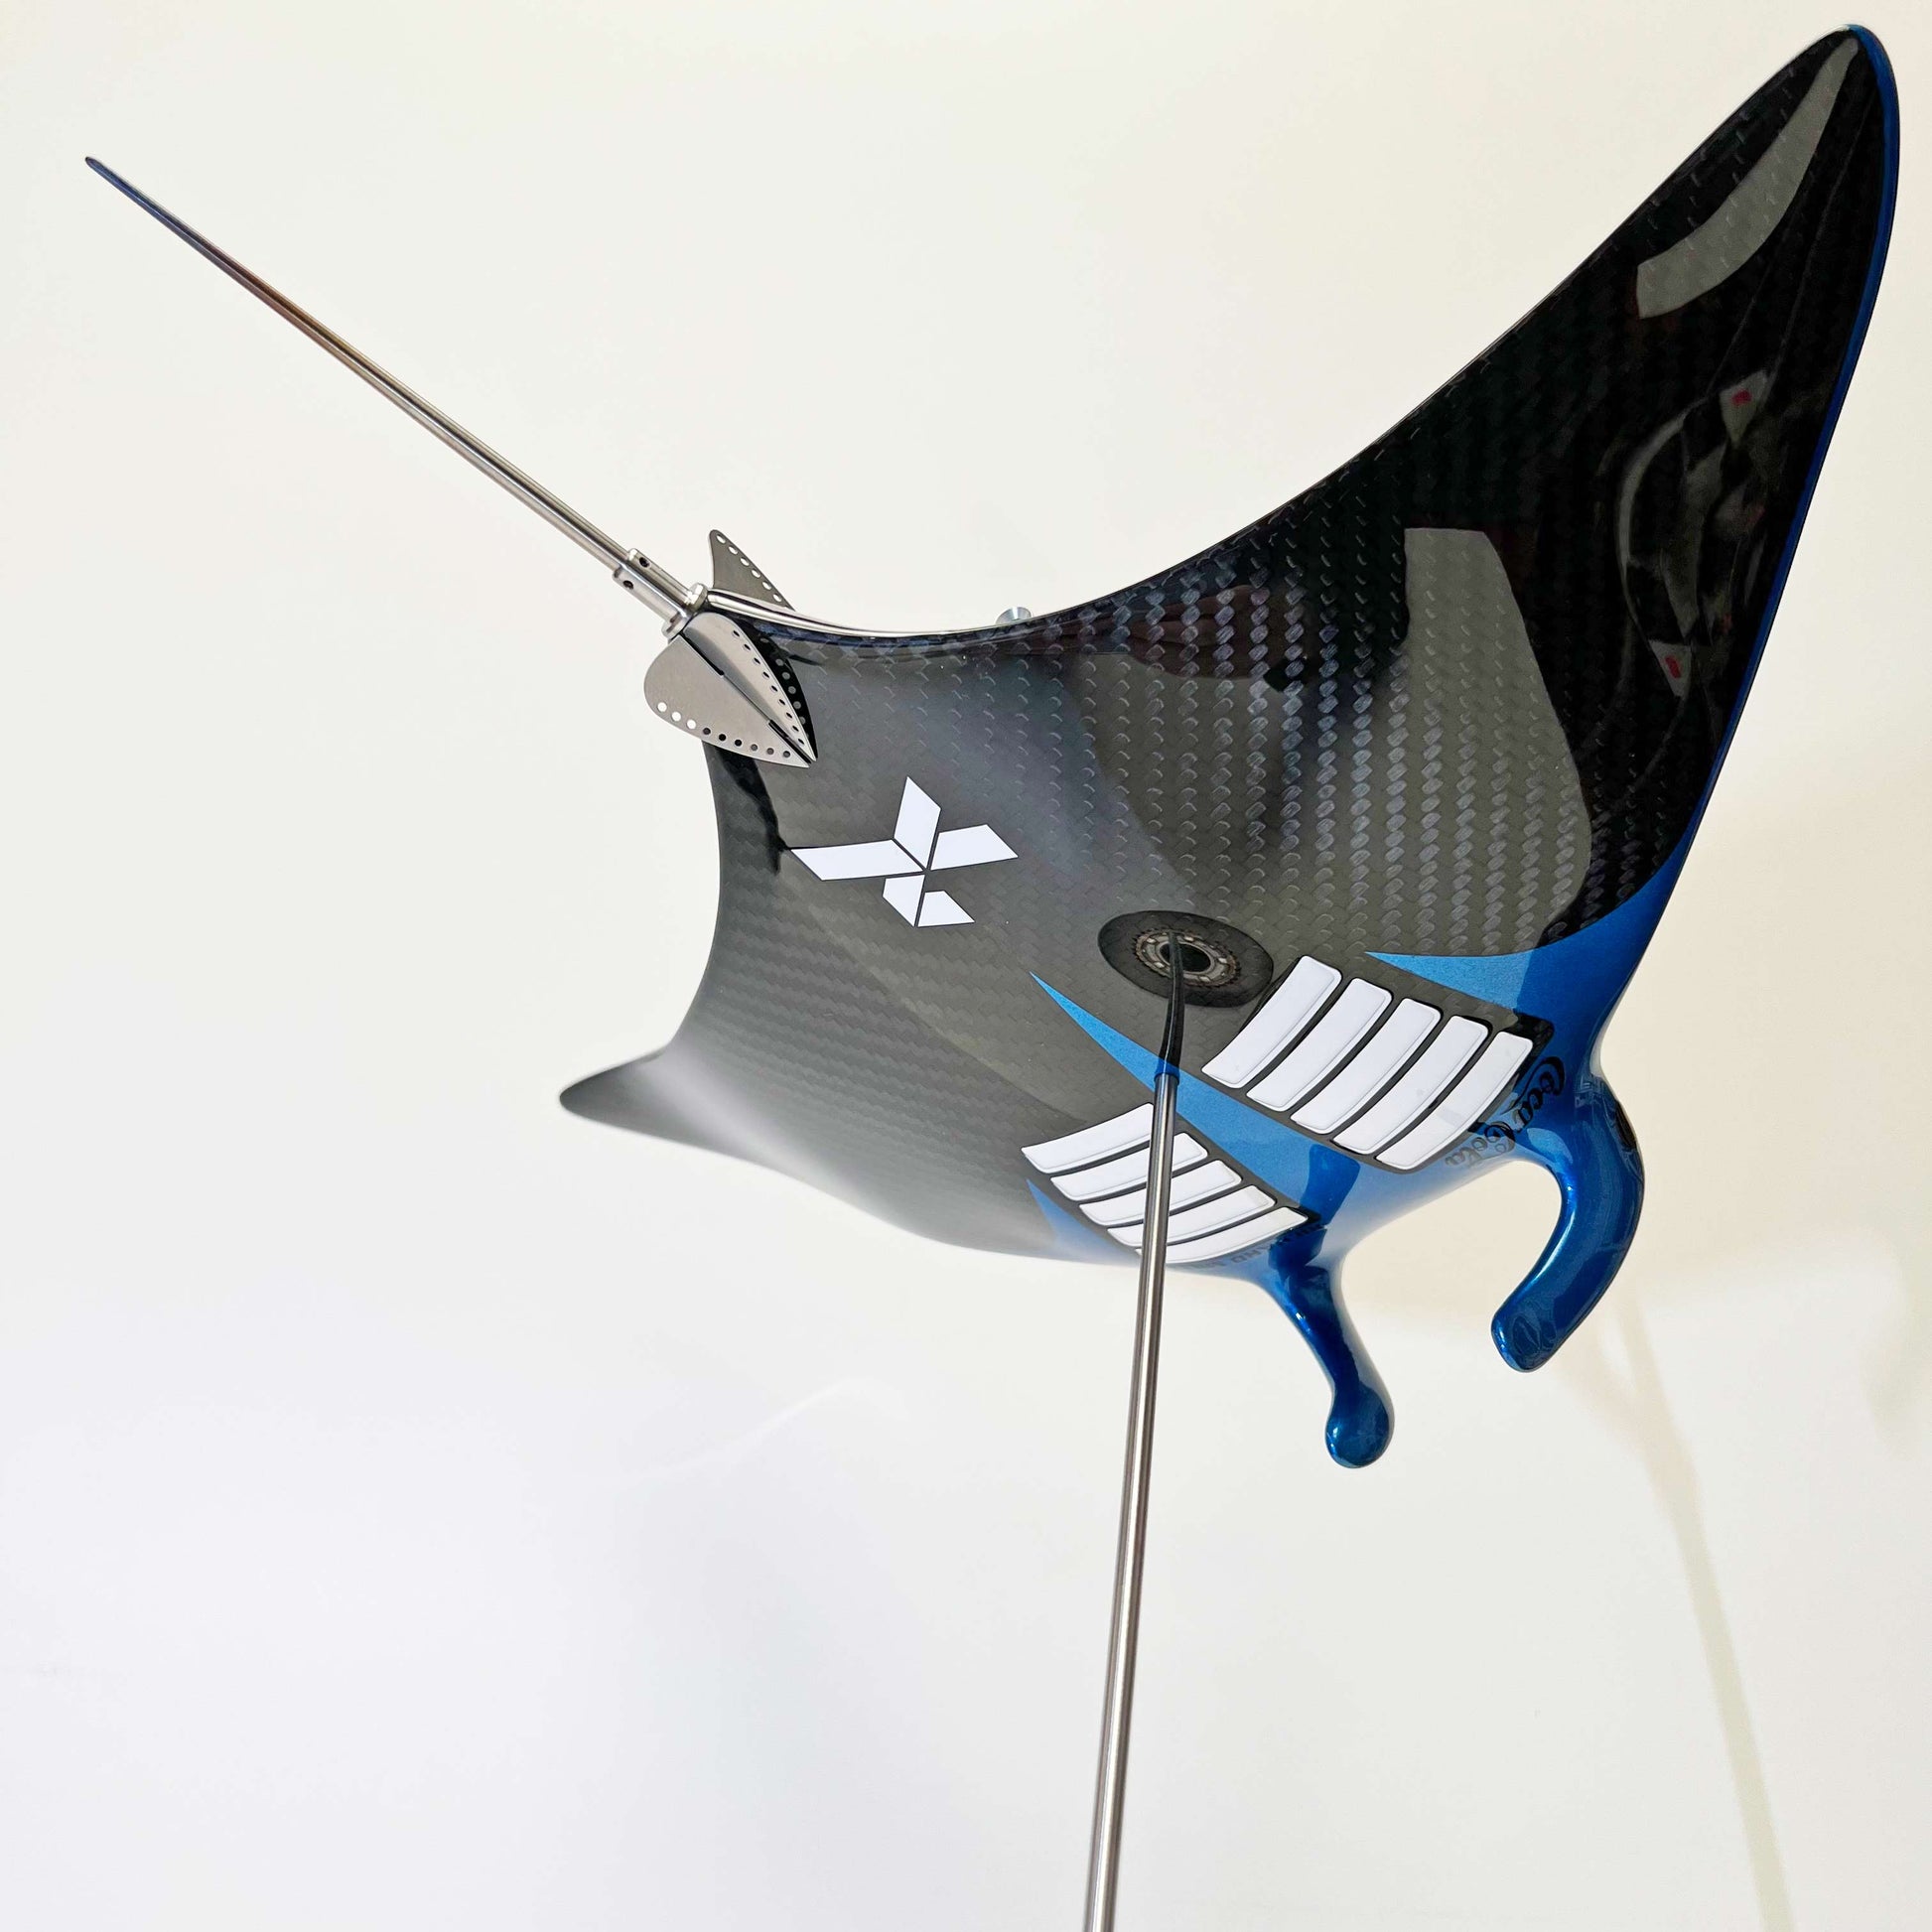 Carbon fibre manta ray sculpture with custom McLaren livery